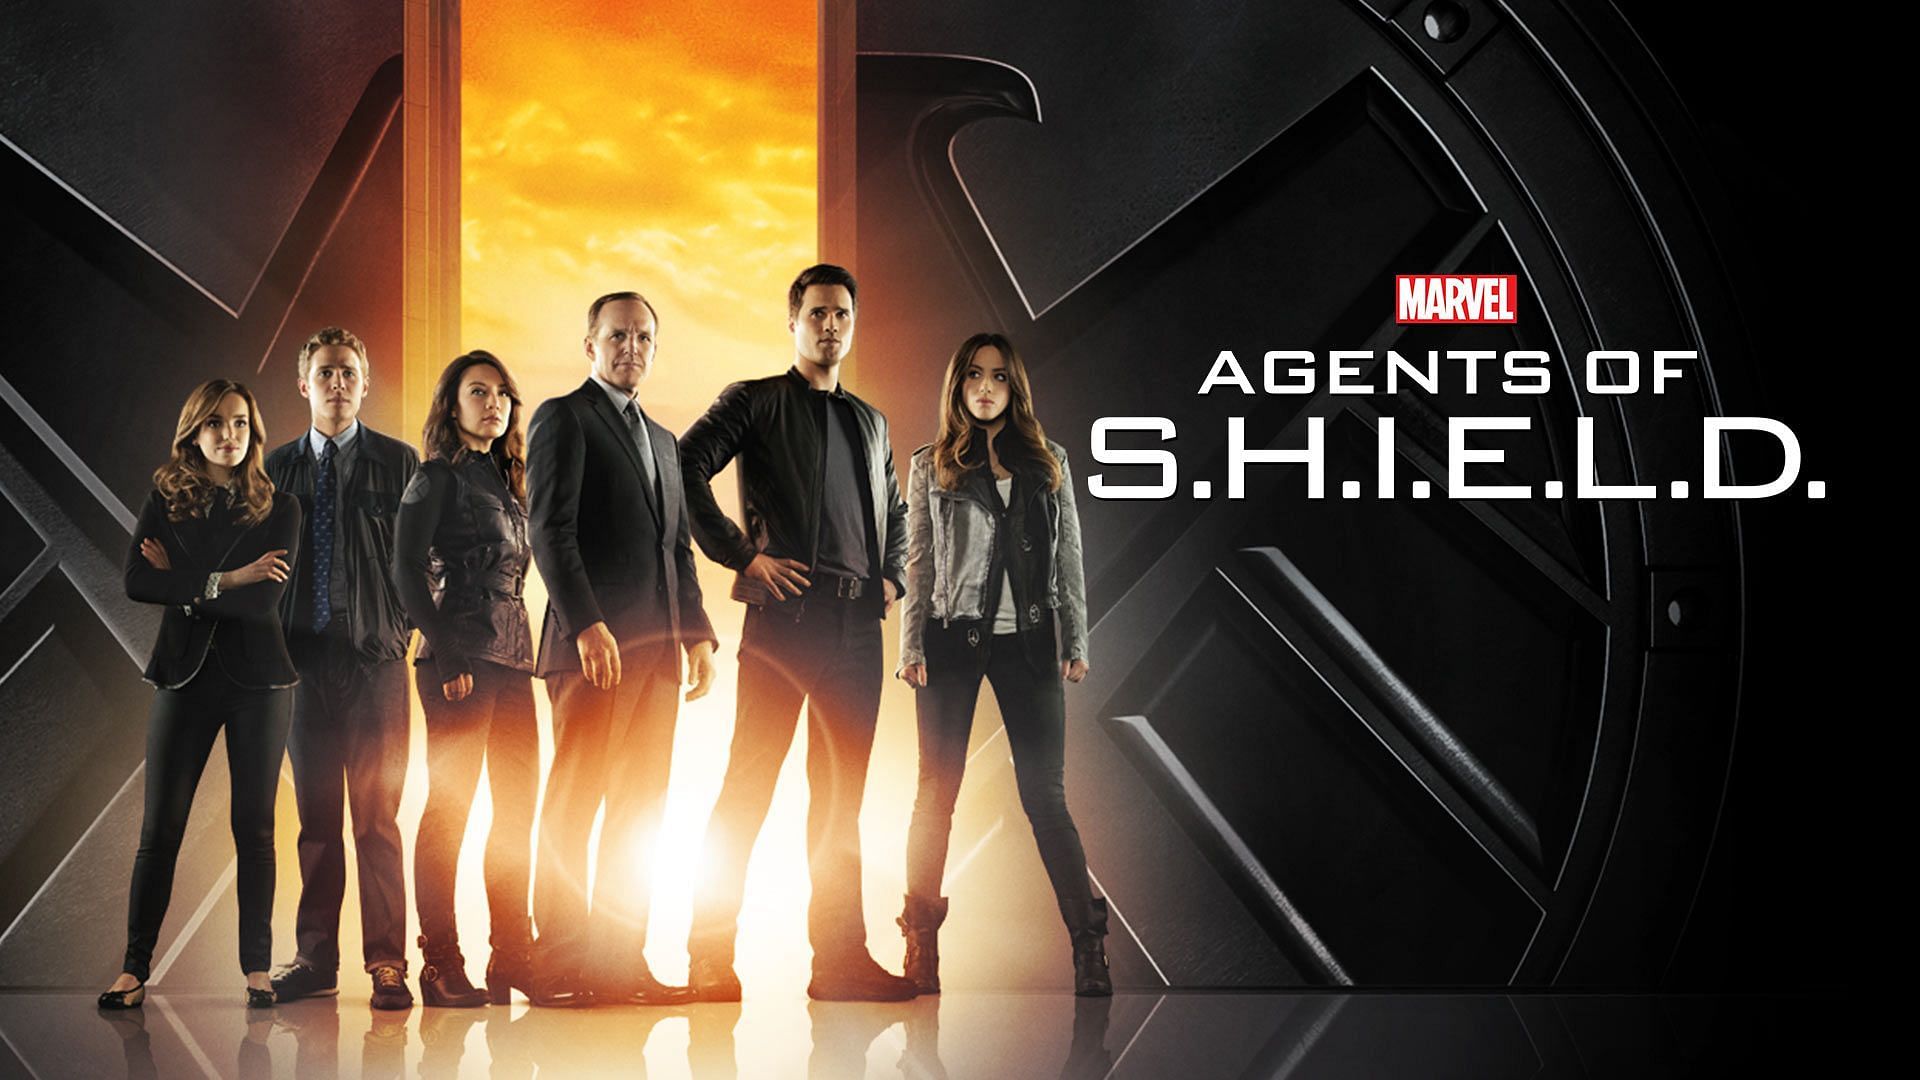 Agents of S.H.I.E.L.D (Image via Marvel.com)